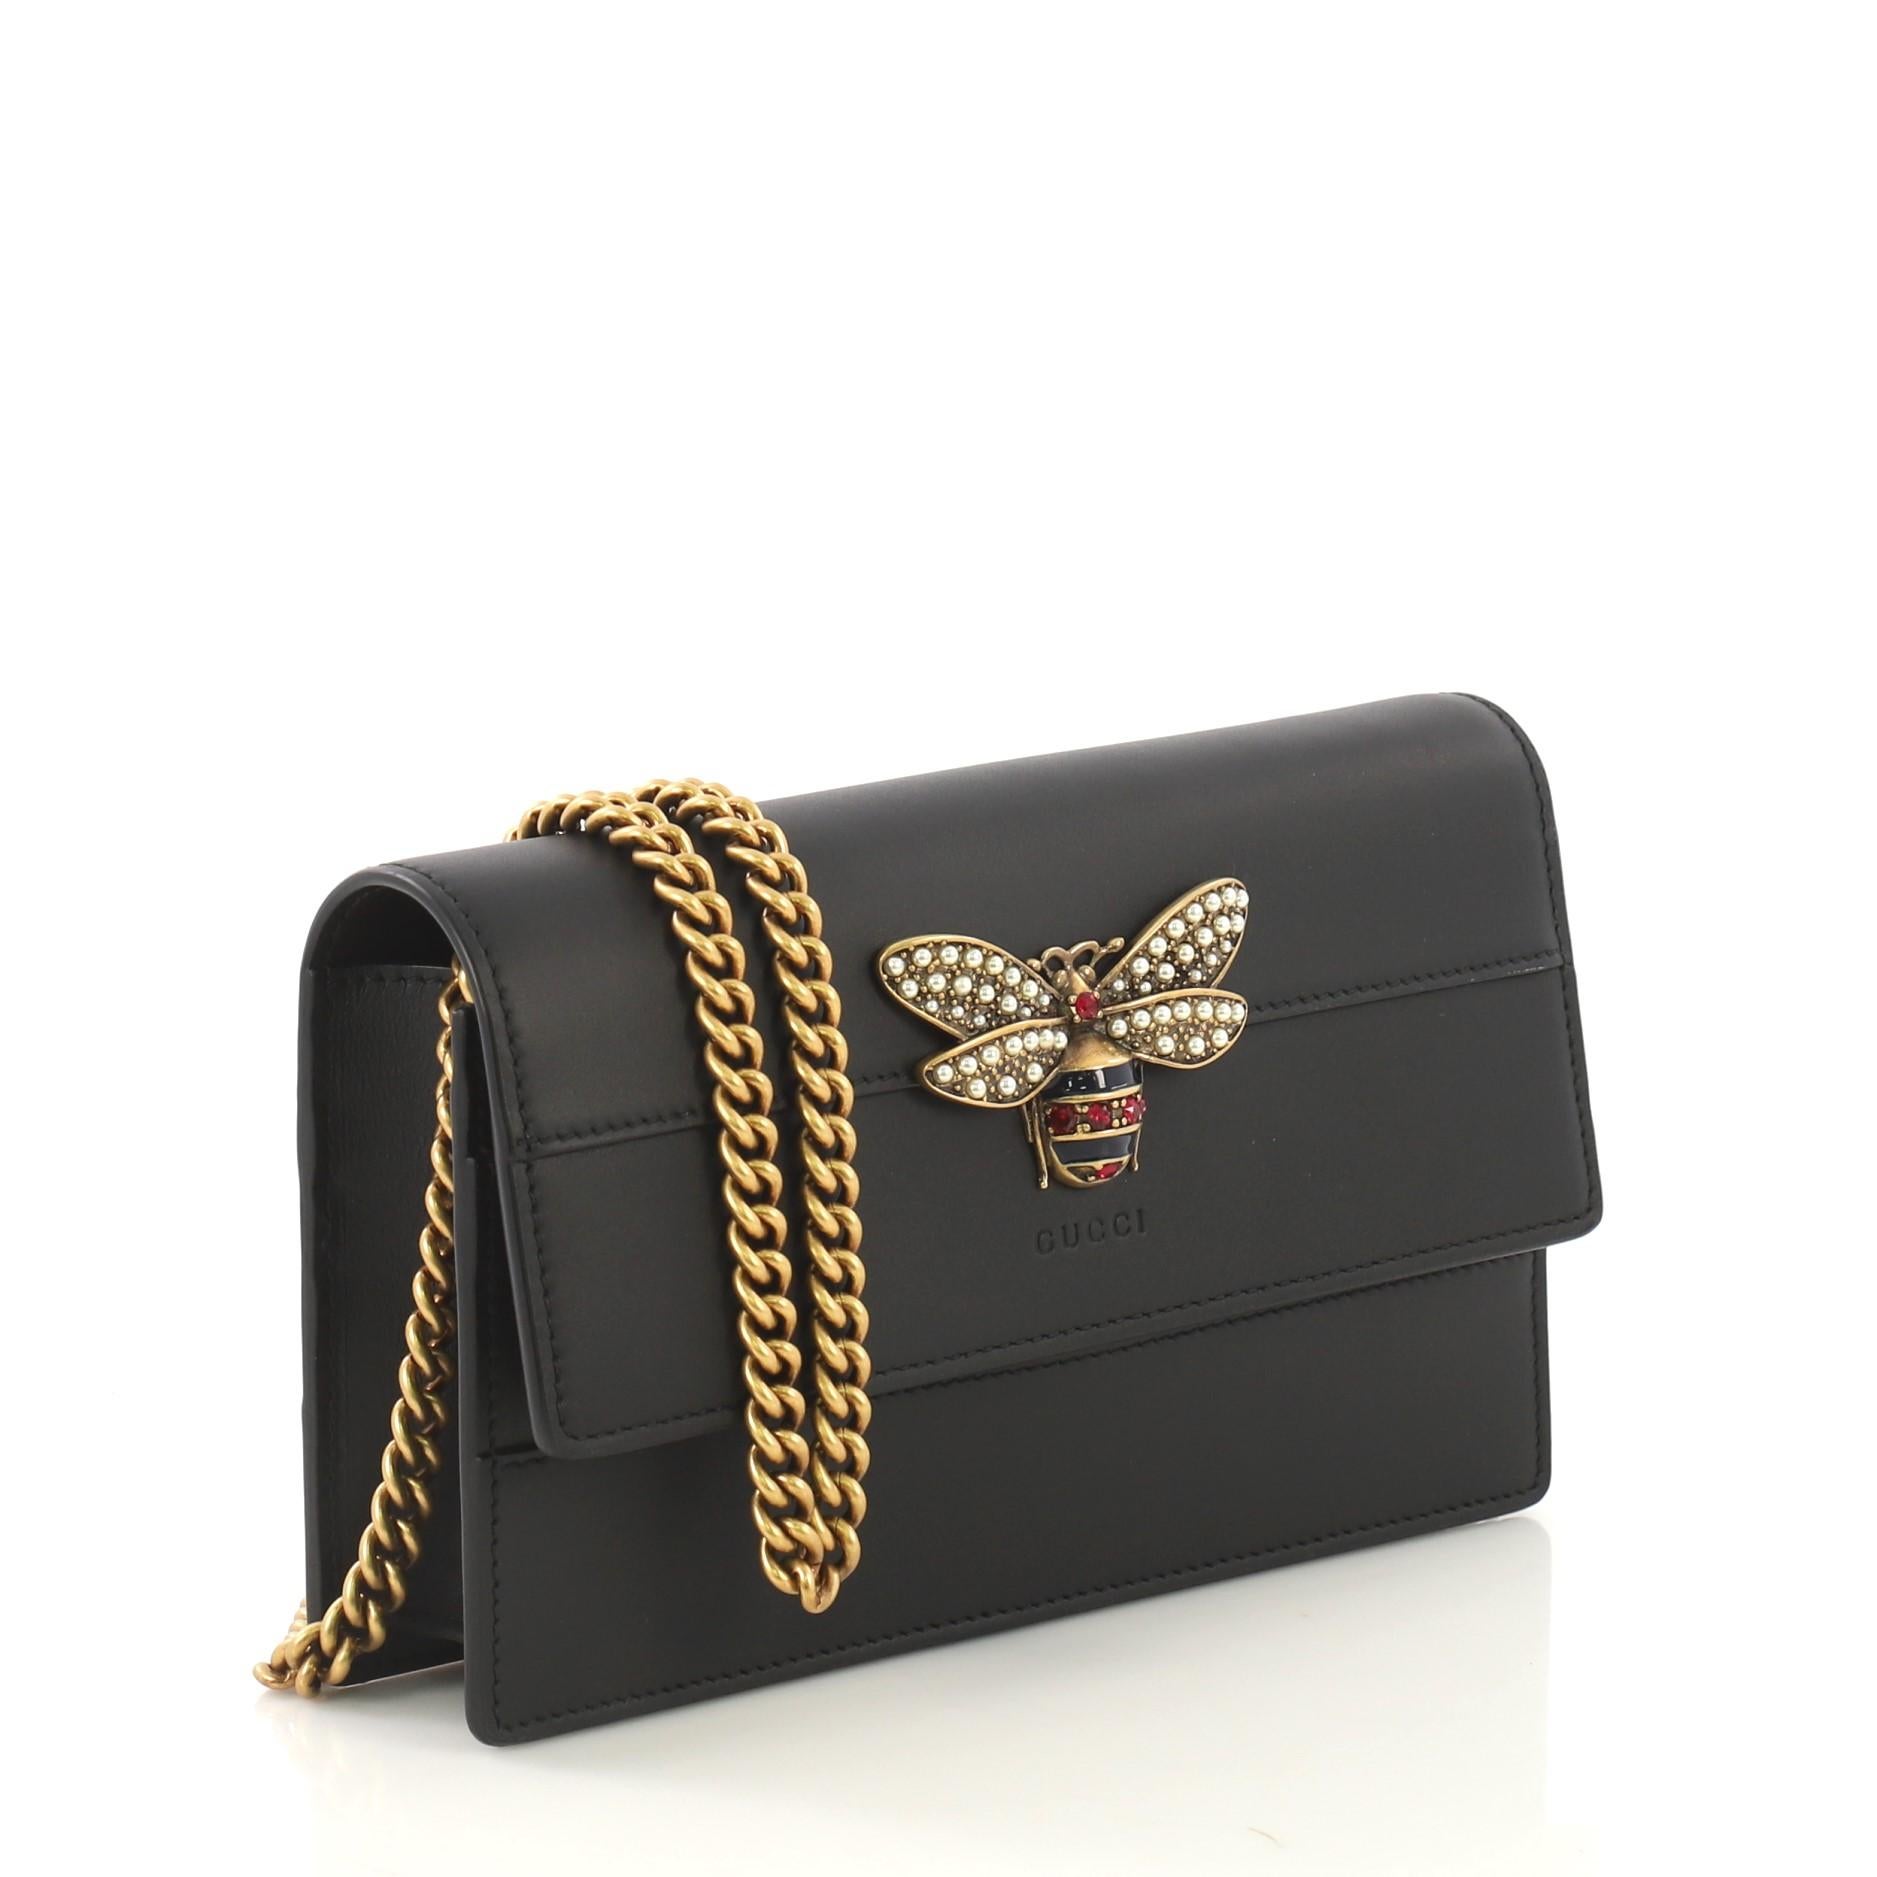 queen margaret leather bee wallet on chain bag